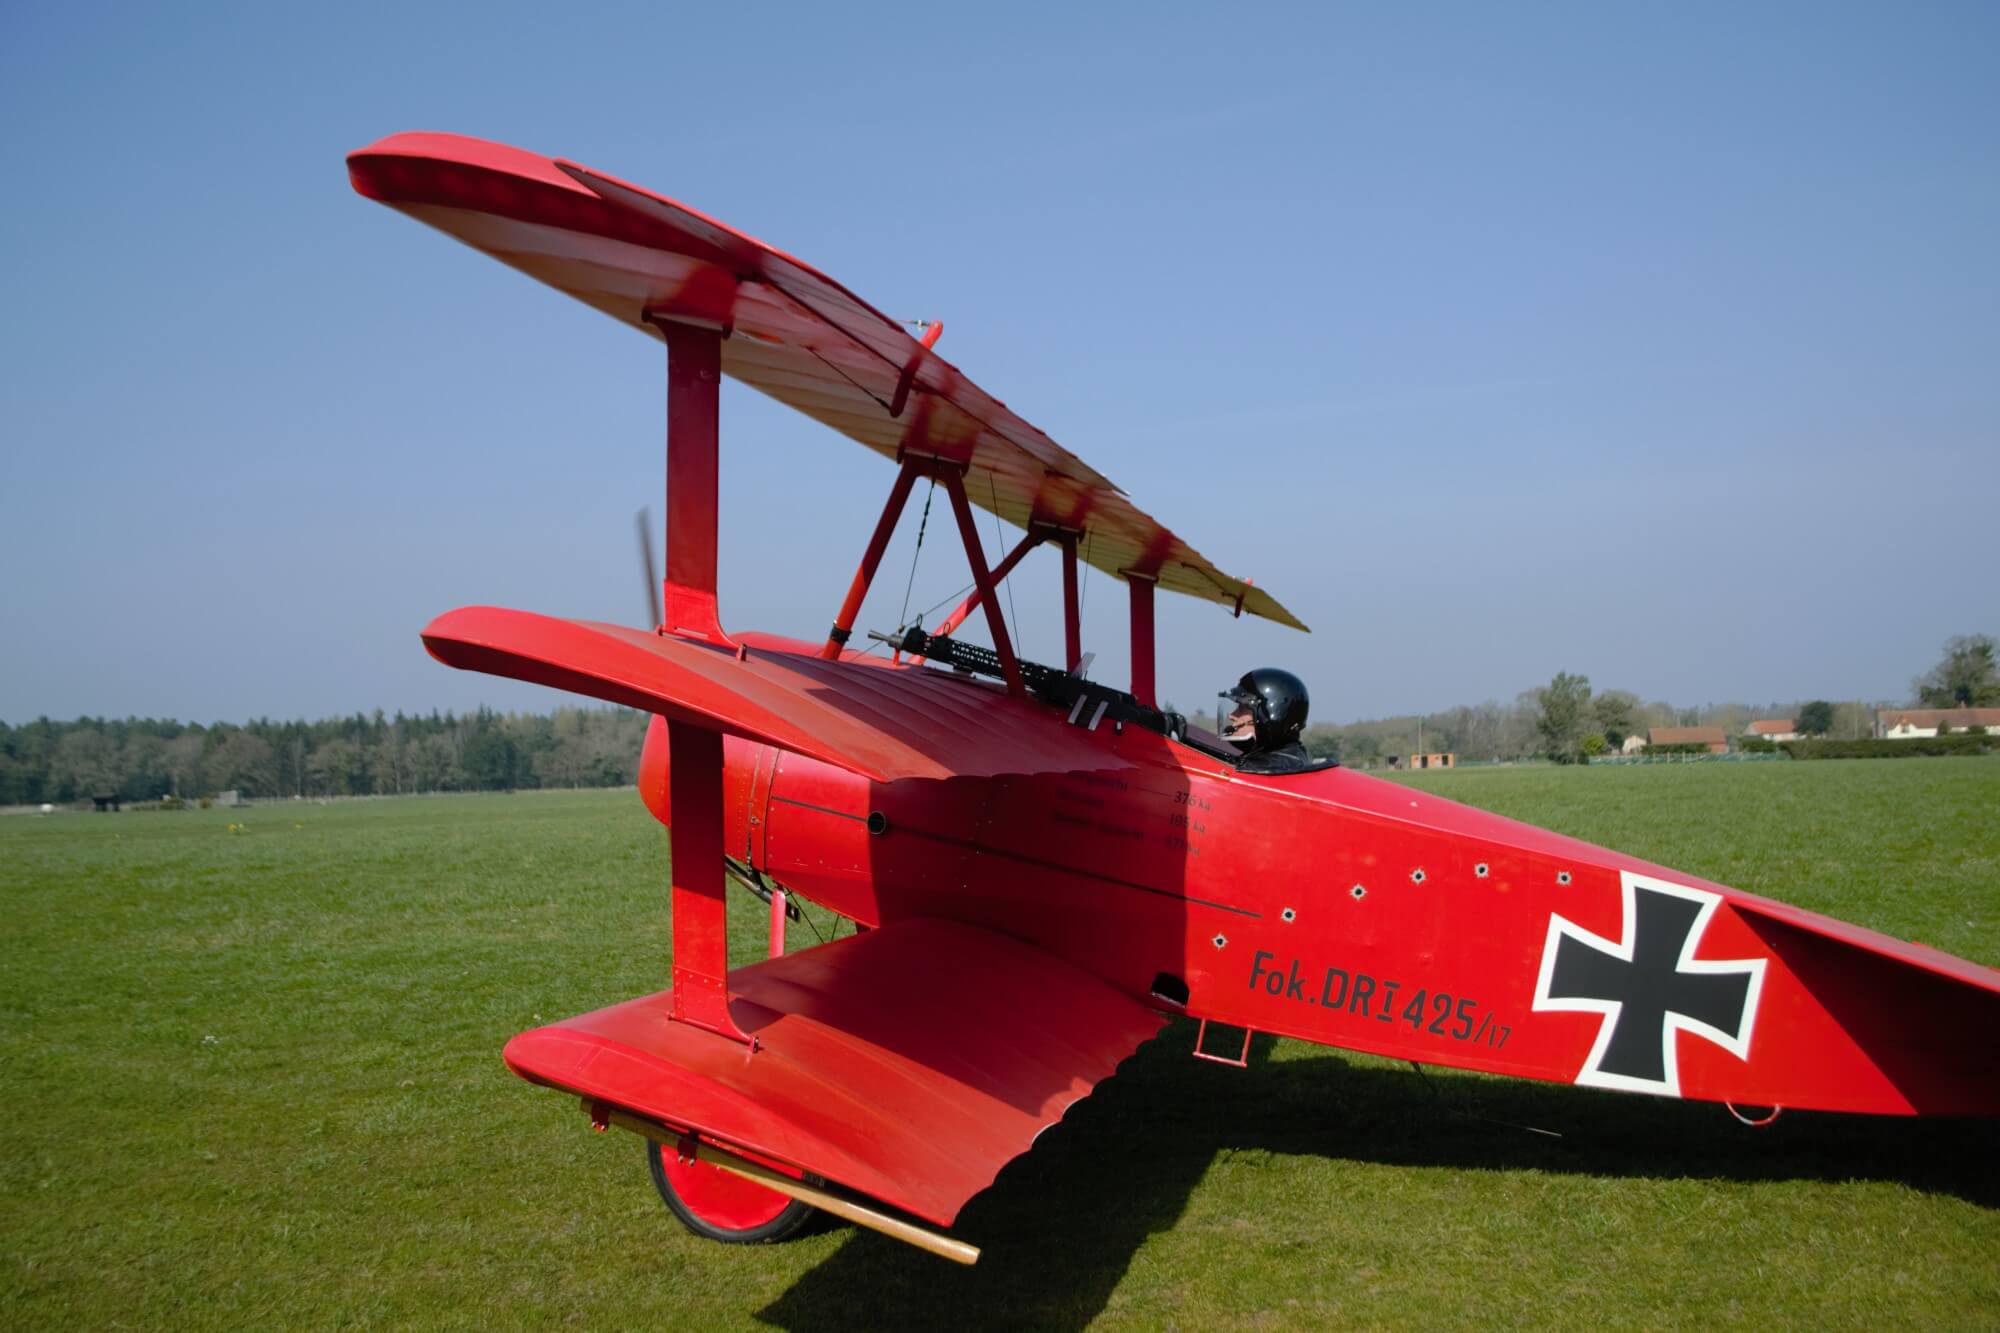 Peter Brueggemann sits in his replica Fokker triplane